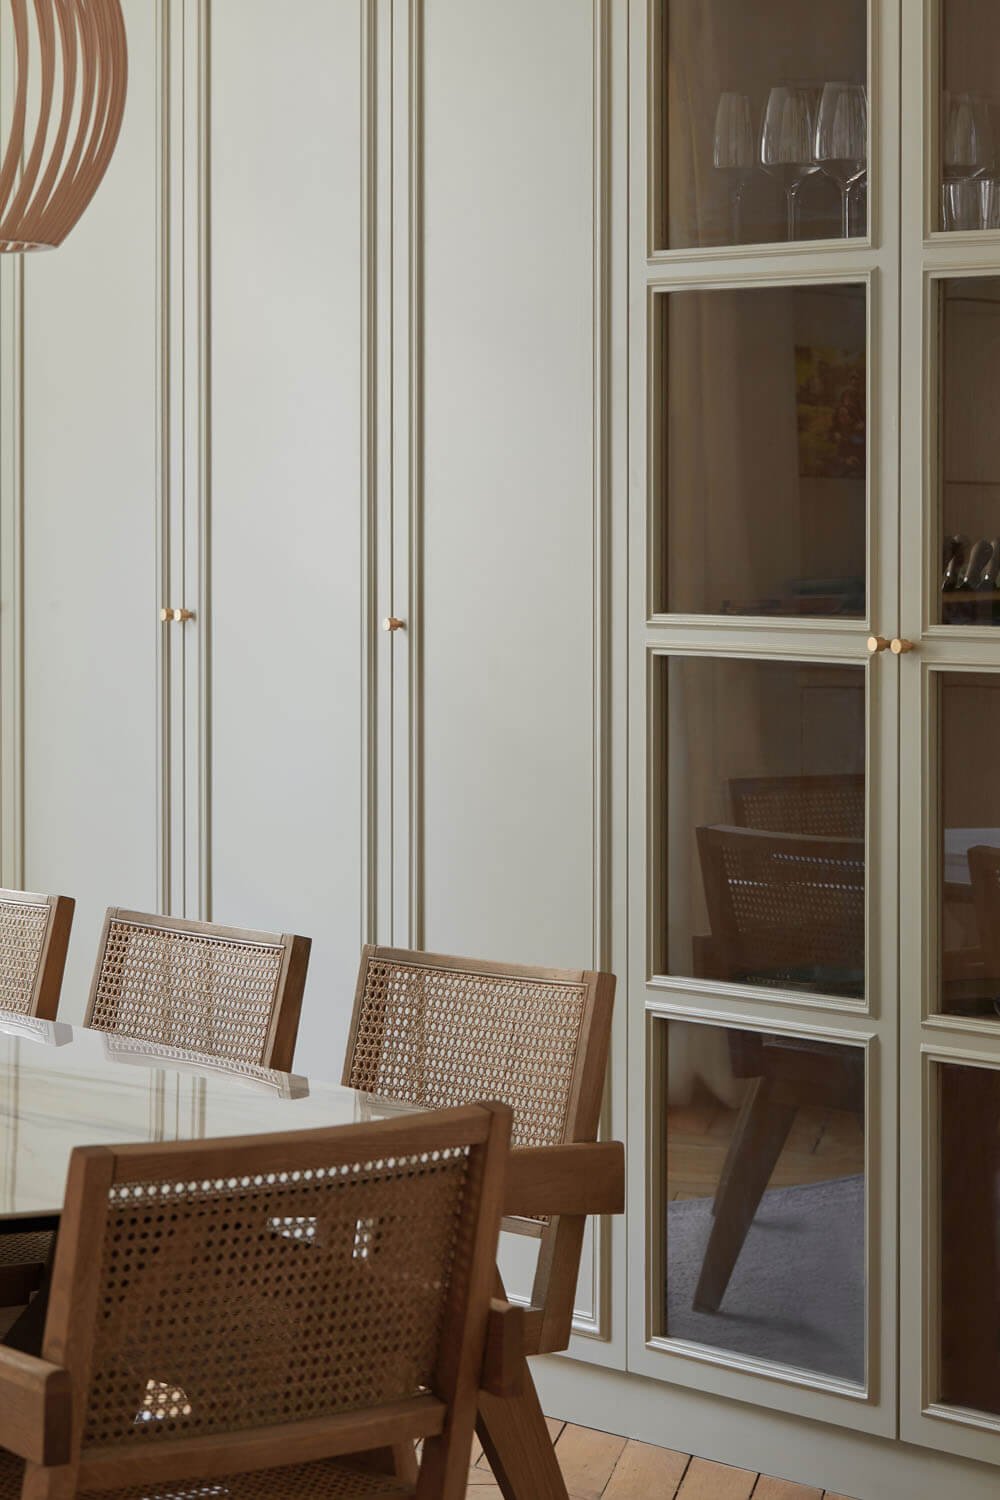 lichelle-silvestry-interior-design-apartment-renovation-wooden-chair-details.jpg